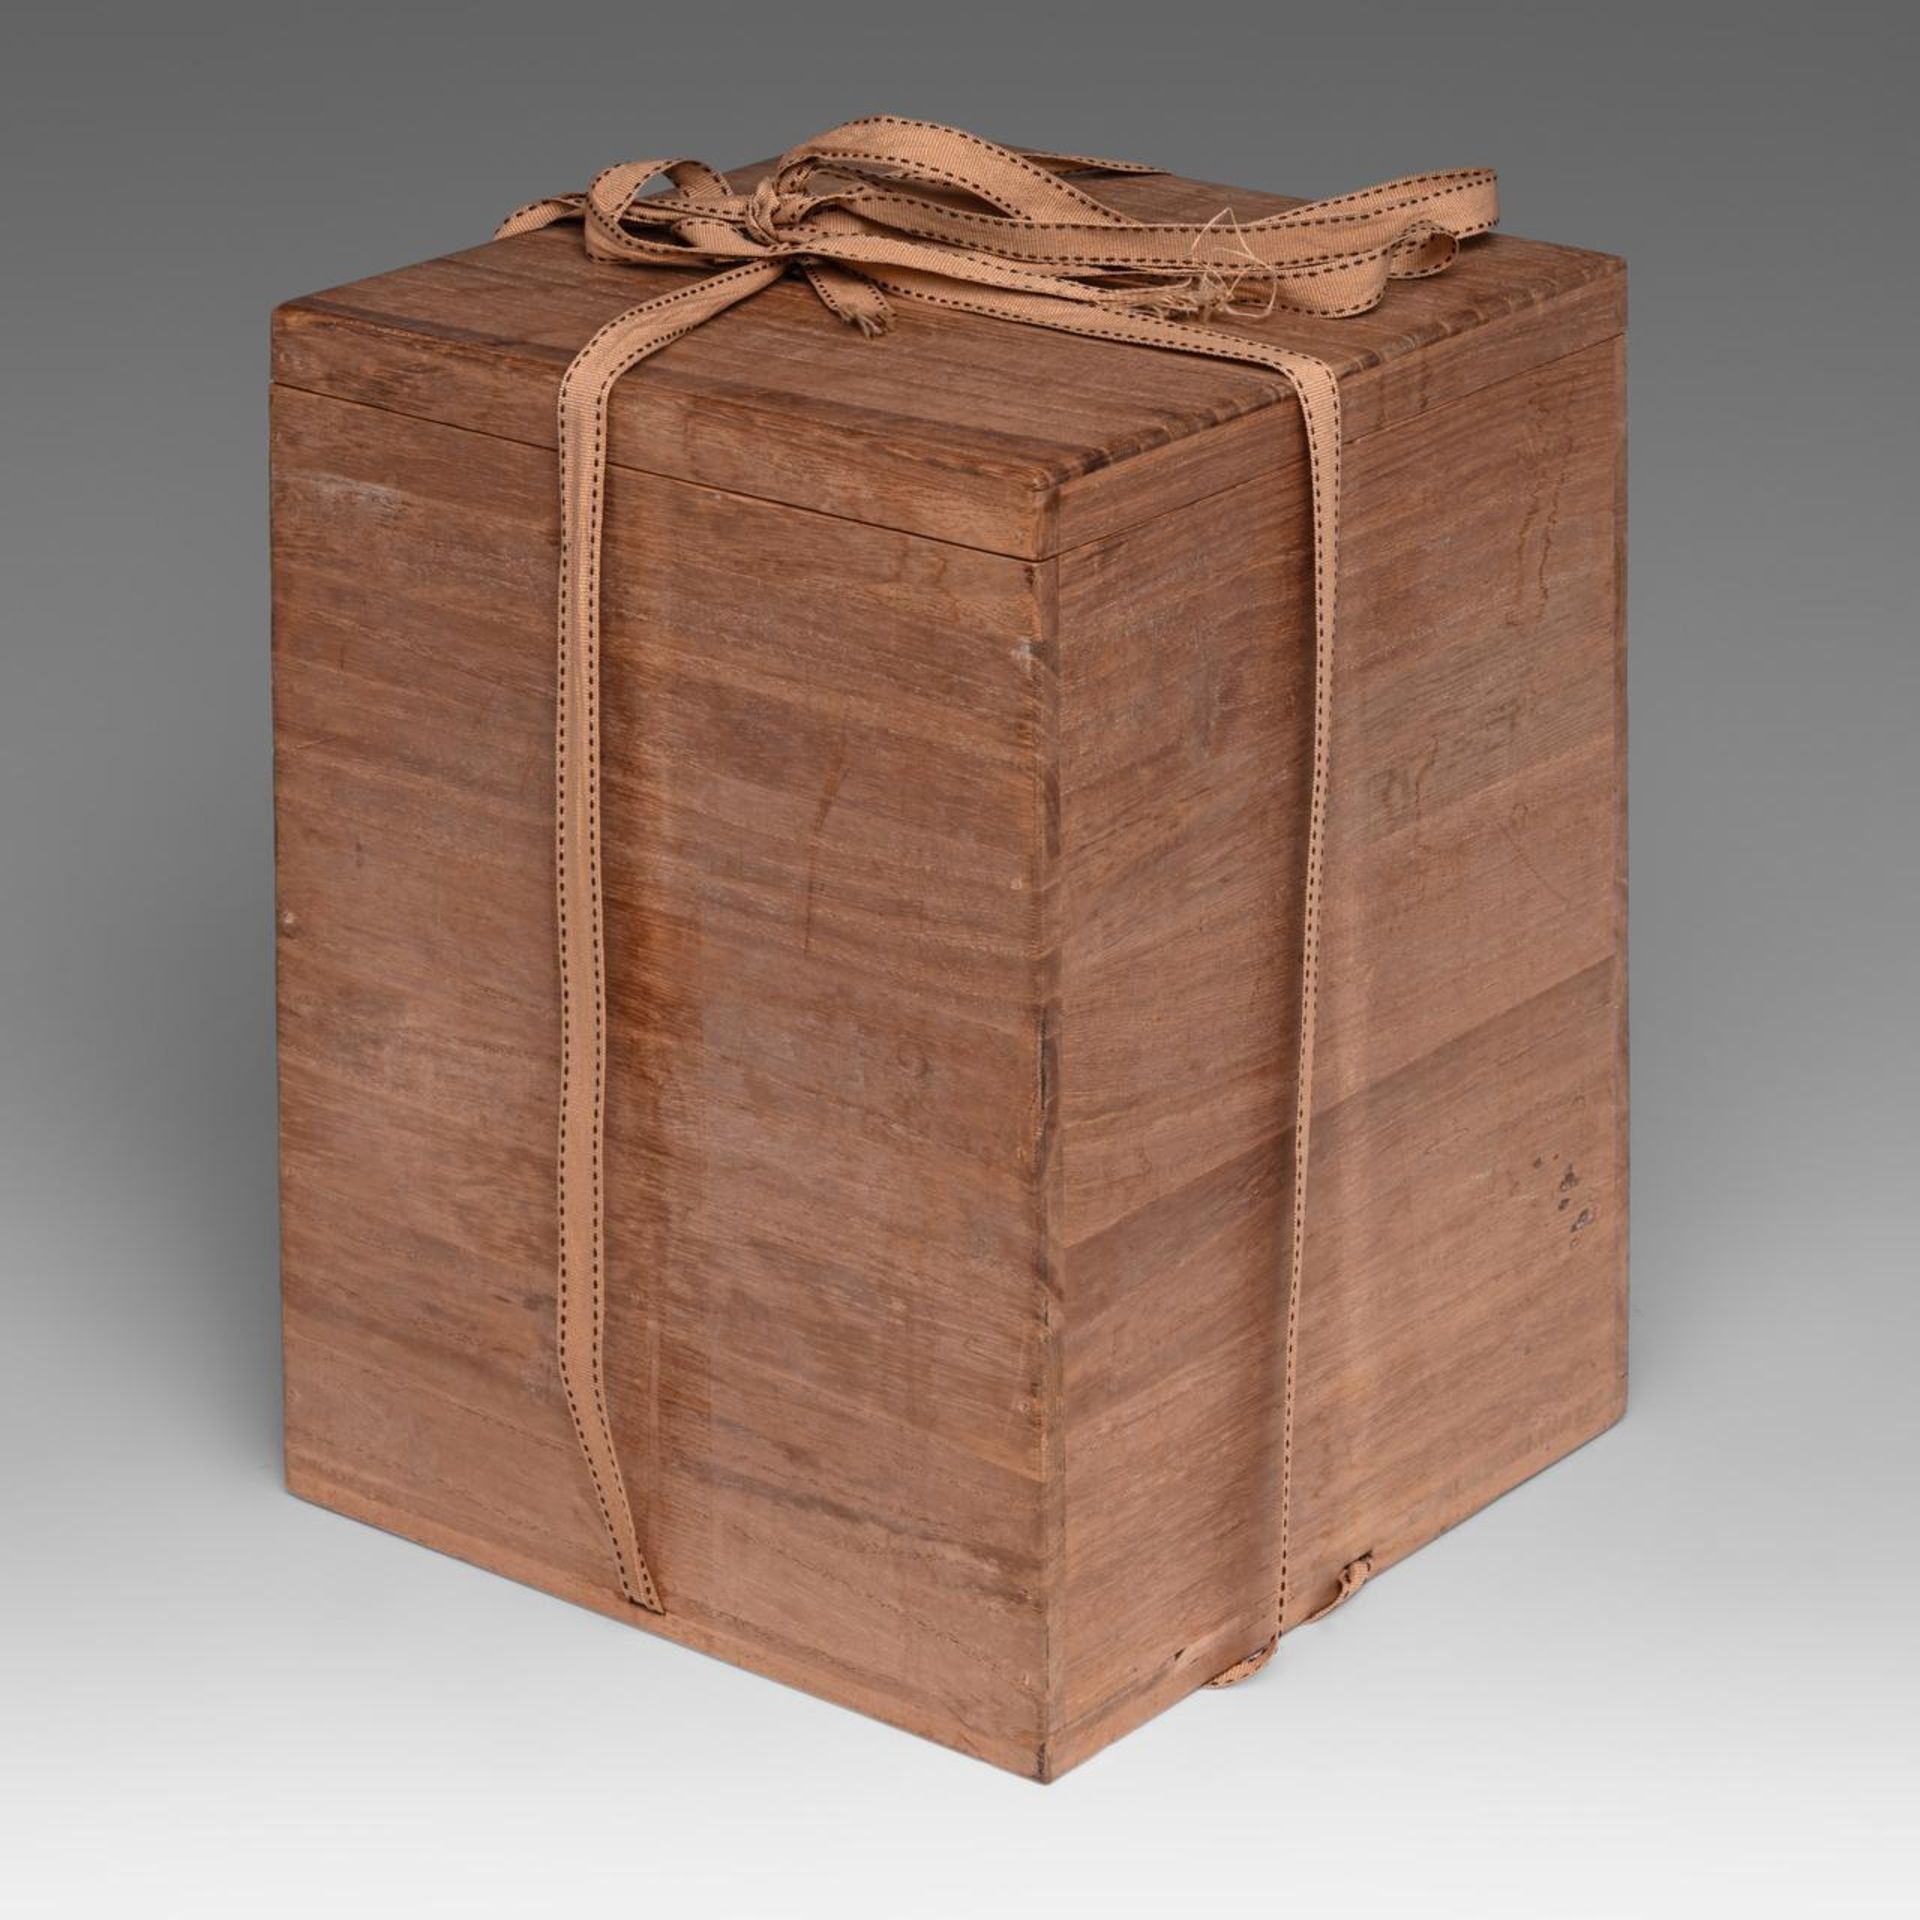 A Chinese Longquan celadon ewer, incl. a tomobako (Japanese wood box), H 33 - W 27 cm (ewer) - Image 7 of 7